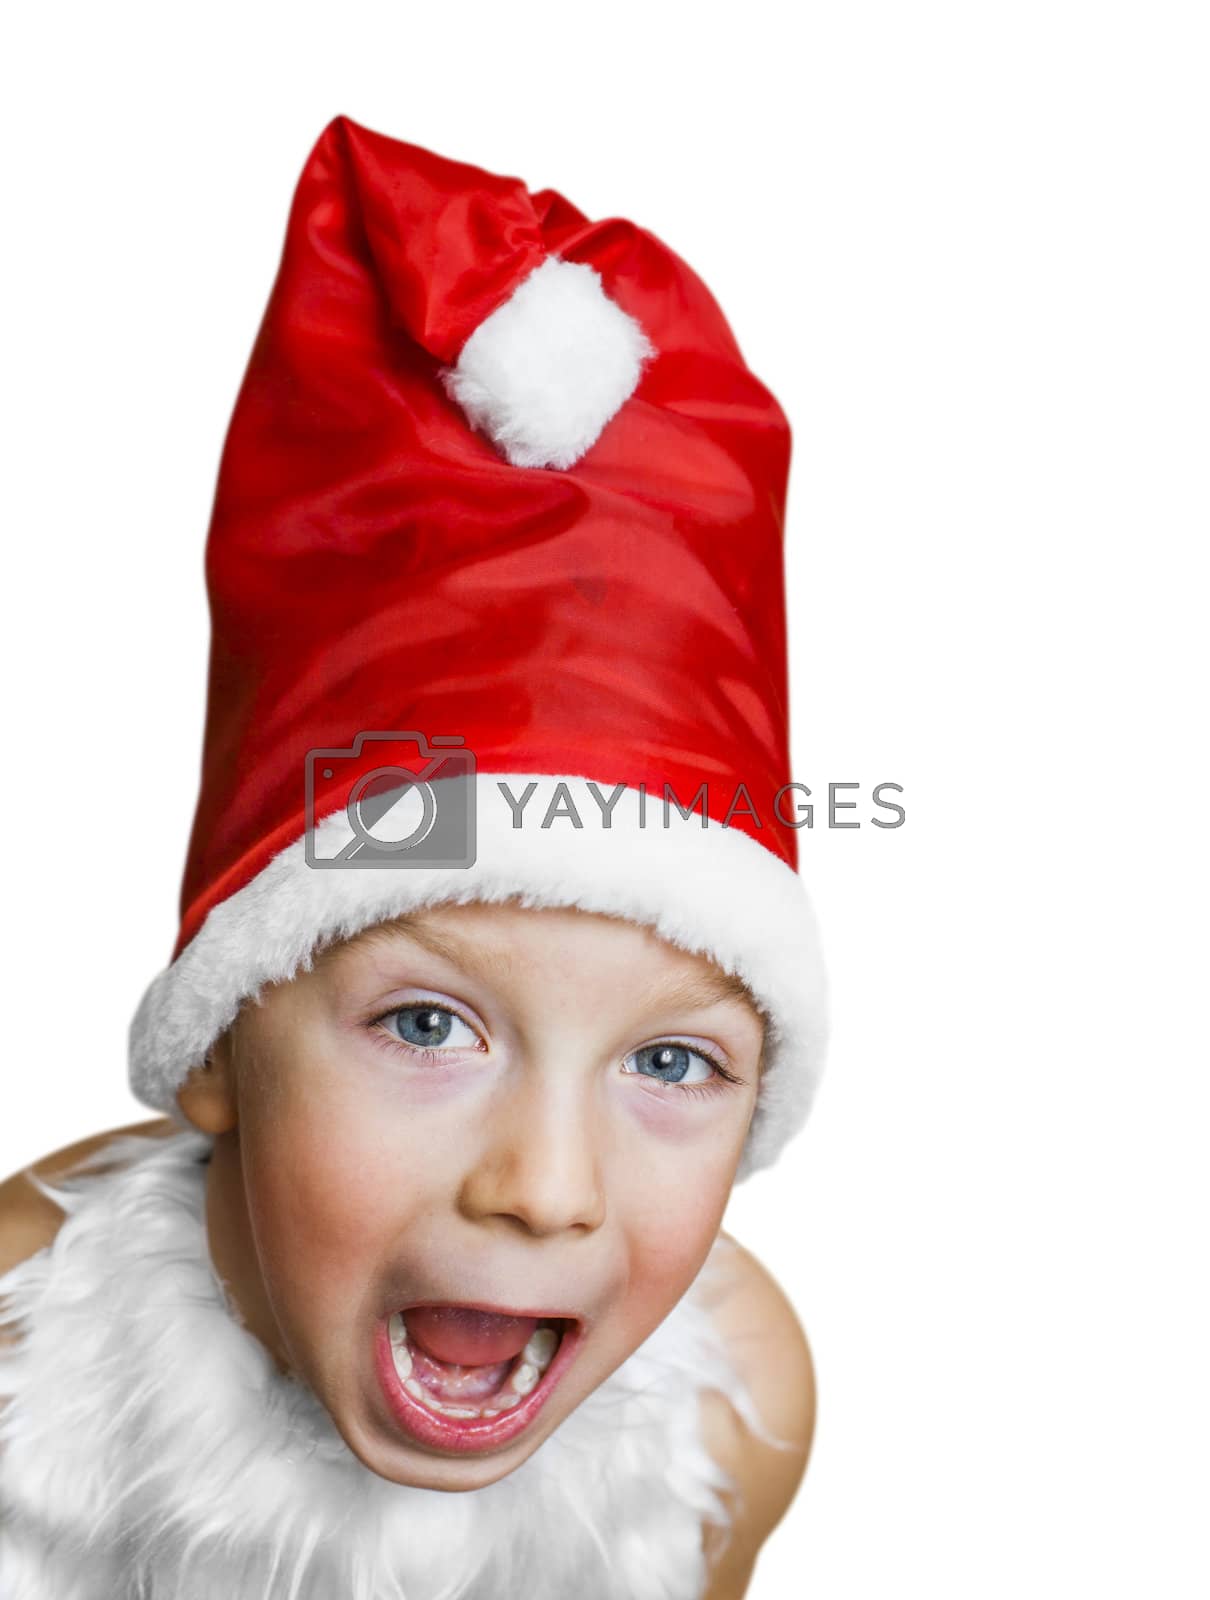 Royalty free image of Santa Claus by anelina